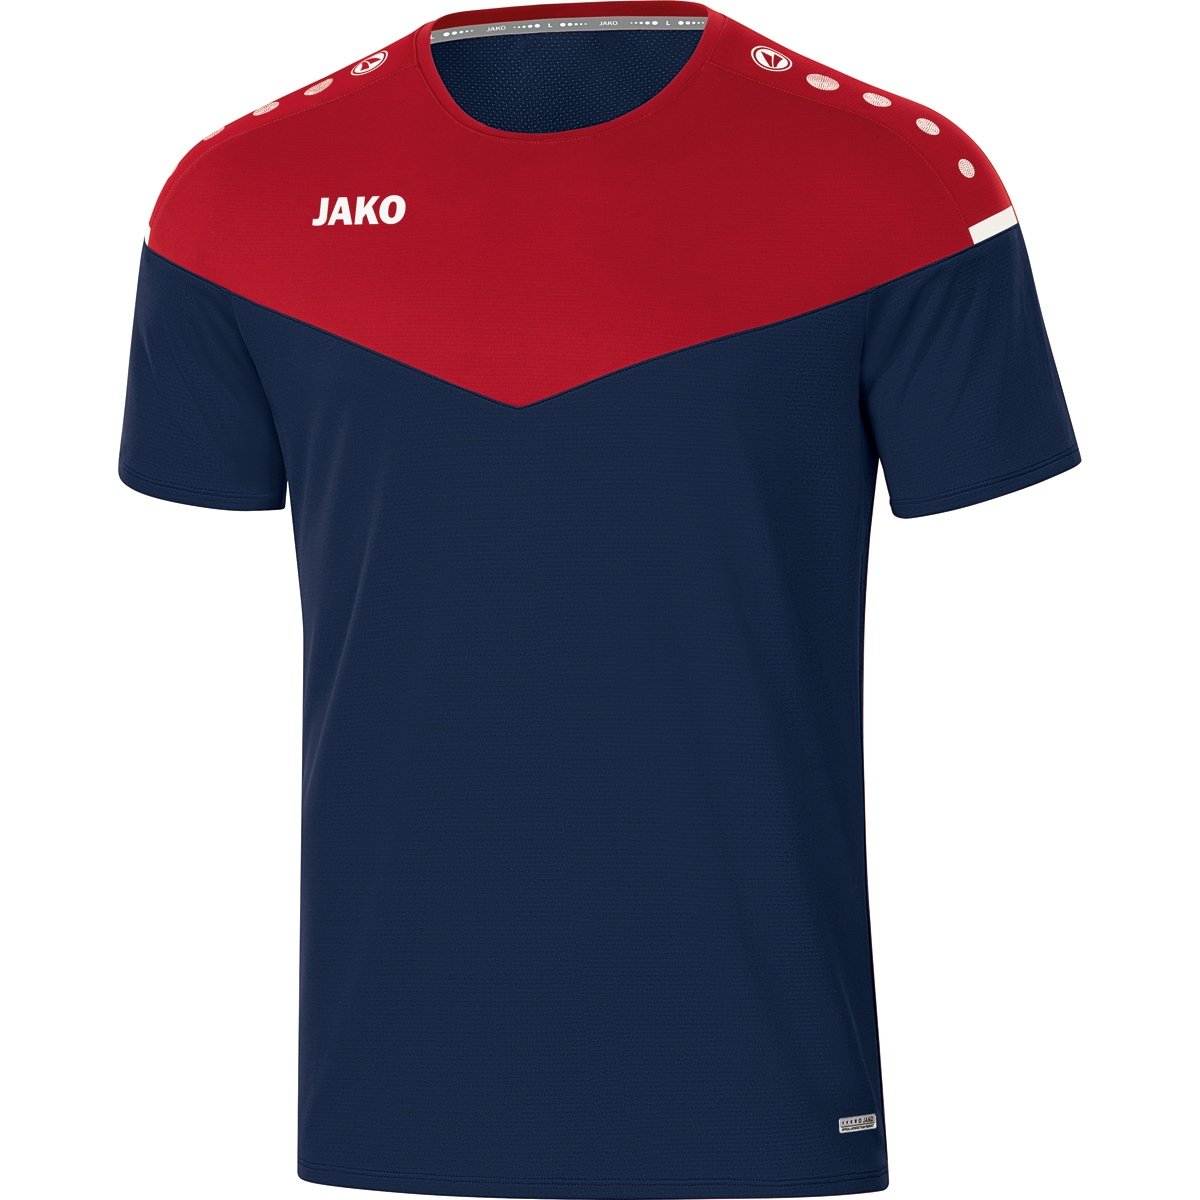 JAKO 2.0 T-Shirt 6120 rot, Gr. marine/chili 116, Kinder, Champ